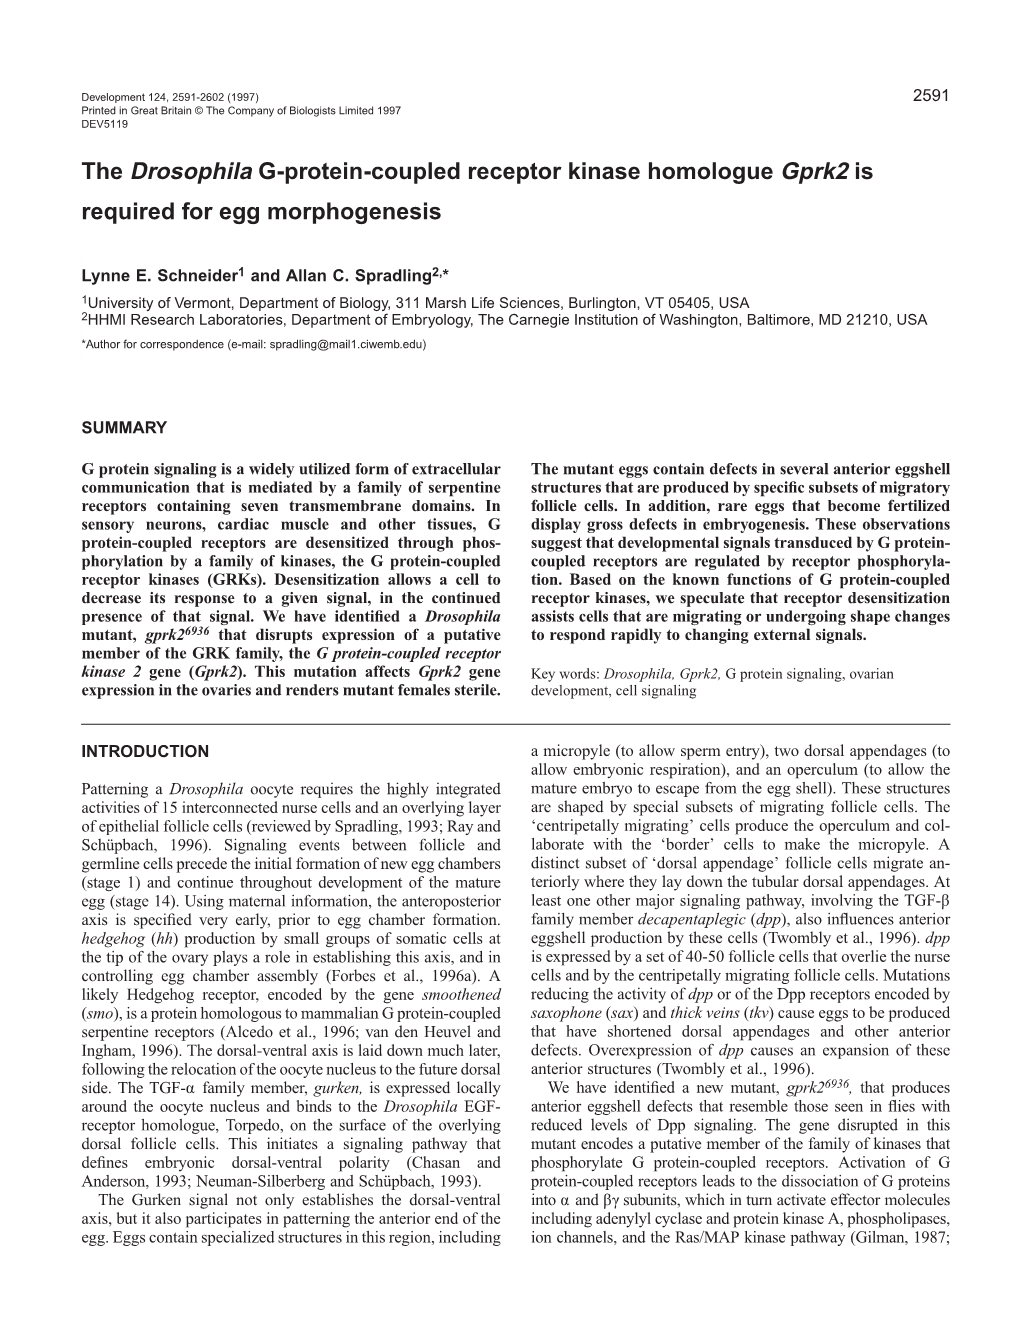 The Drosophila G-Protein-Coupled Receptor Kinase Homologue Gprk2 Is Required for Egg Morphogenesis